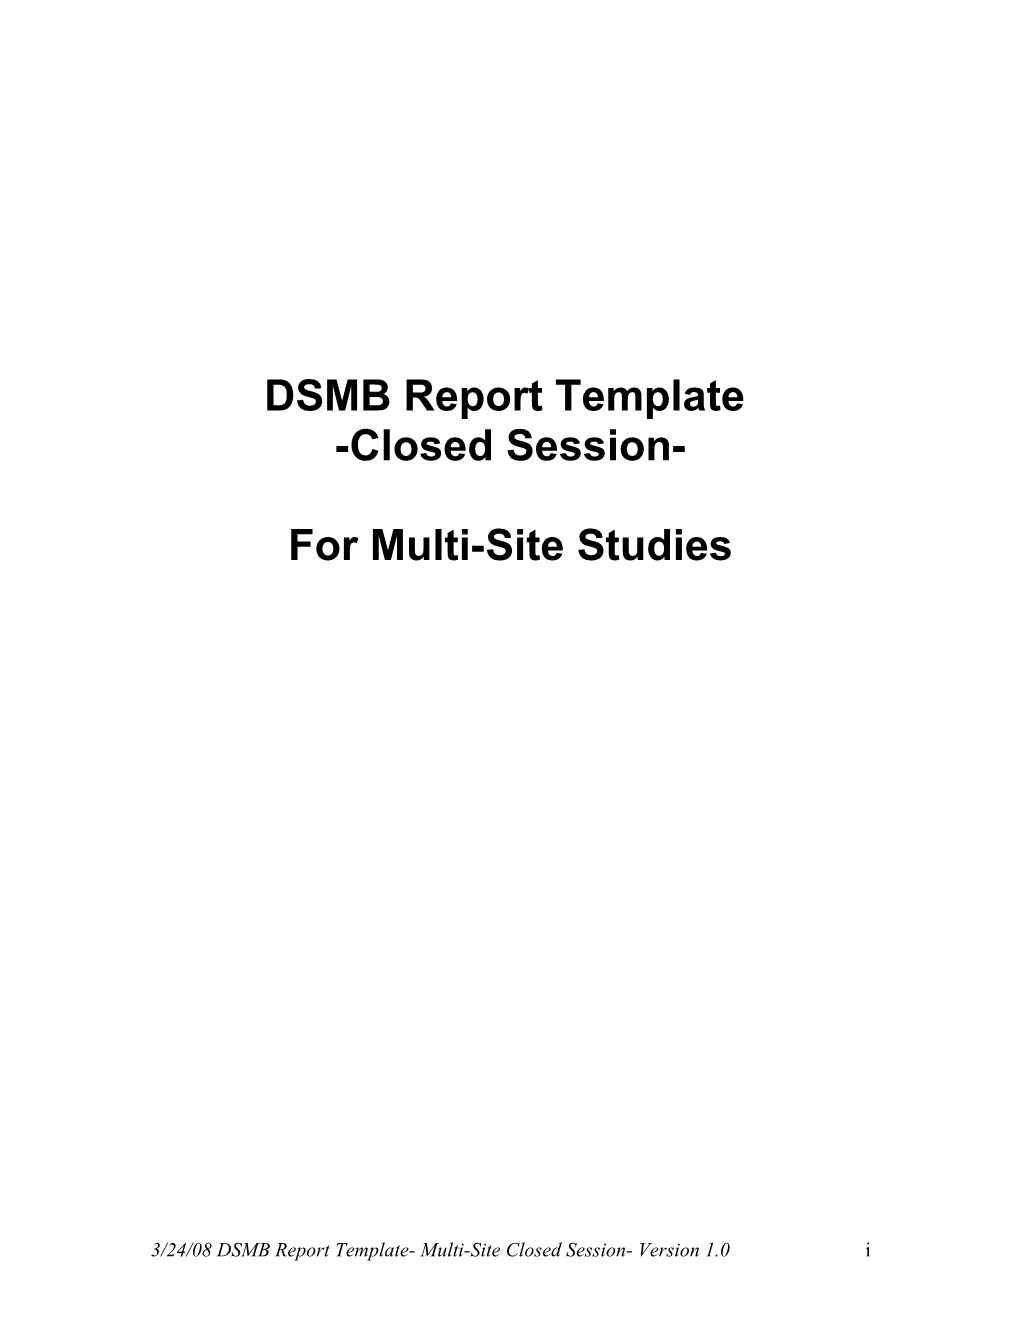 DSMB Report Template s1